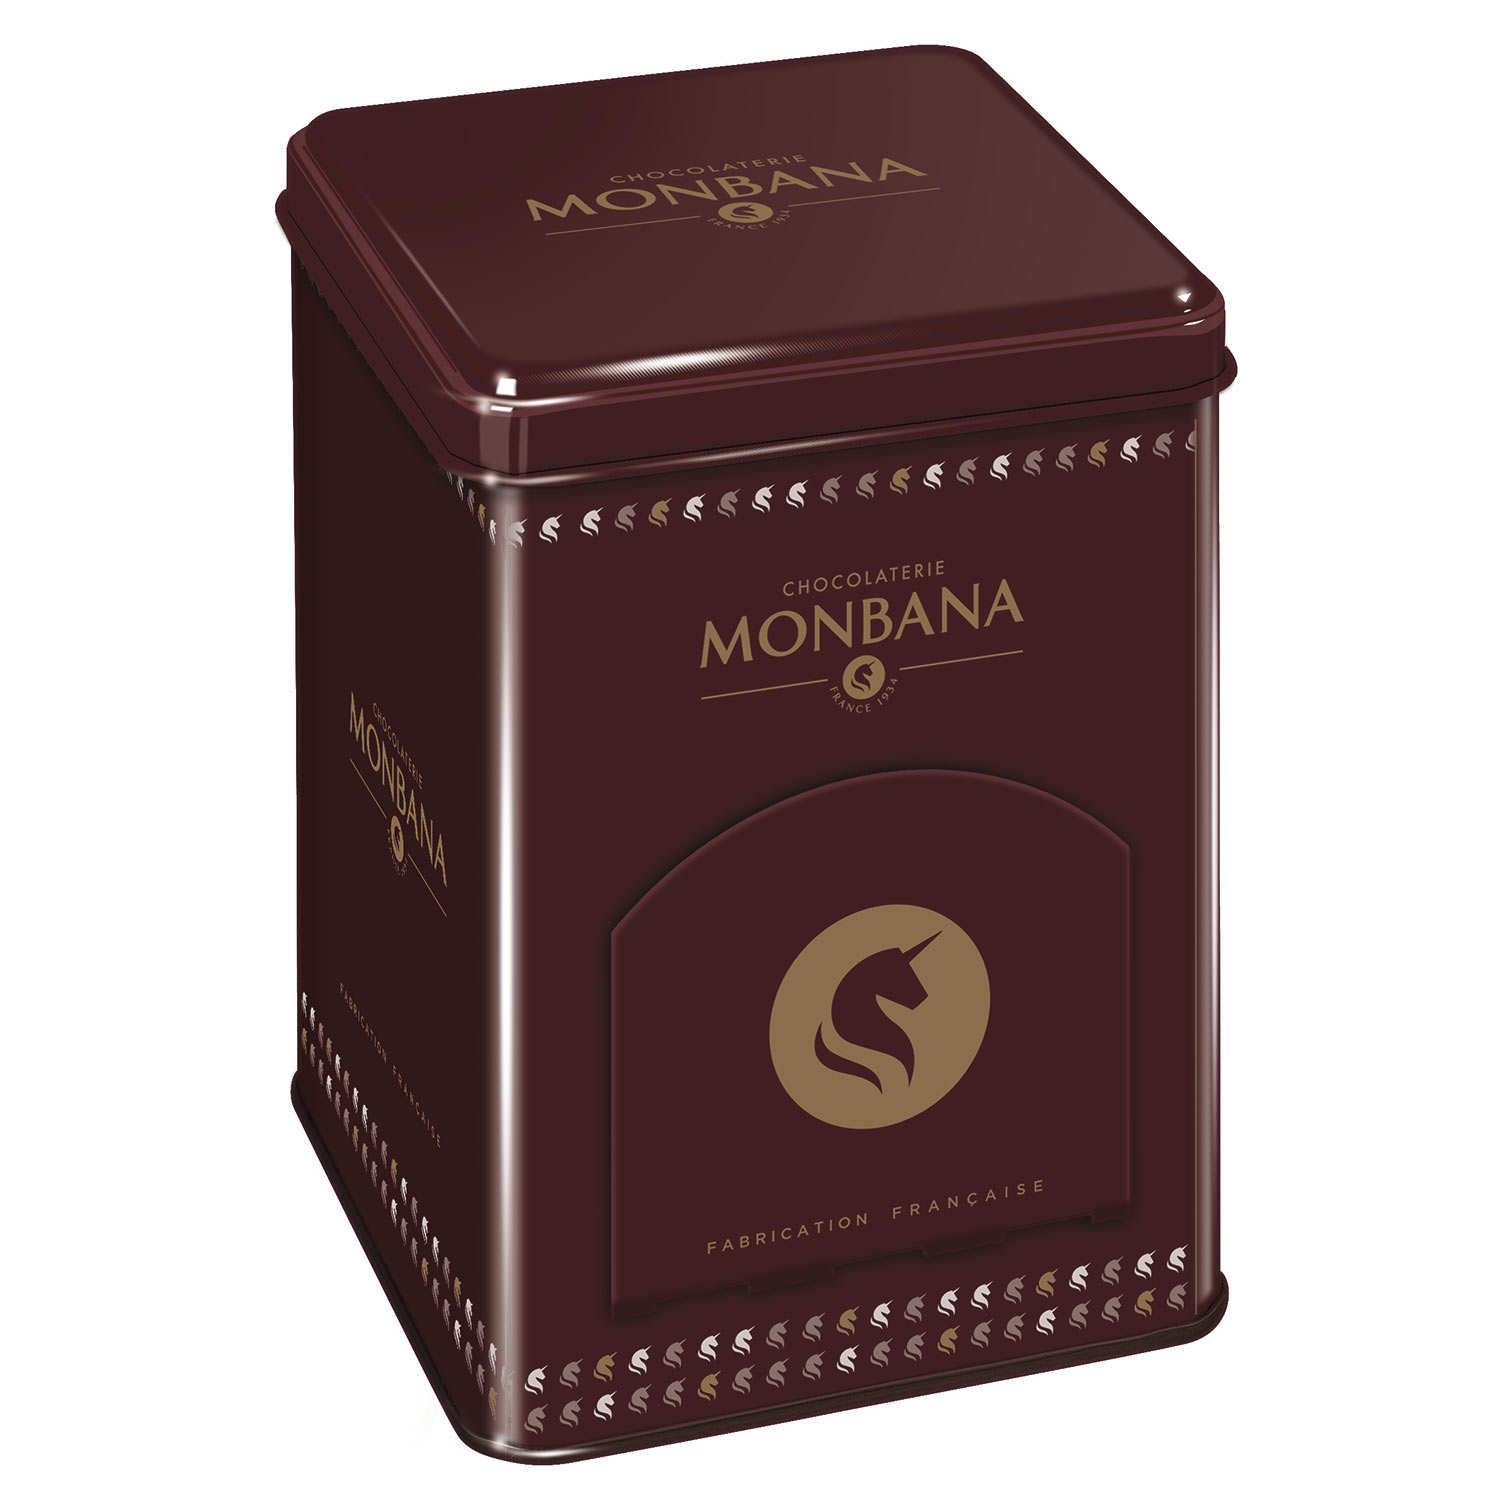 Maxibox Collector Monbana - Chocolate box - Monbana Chocolatier